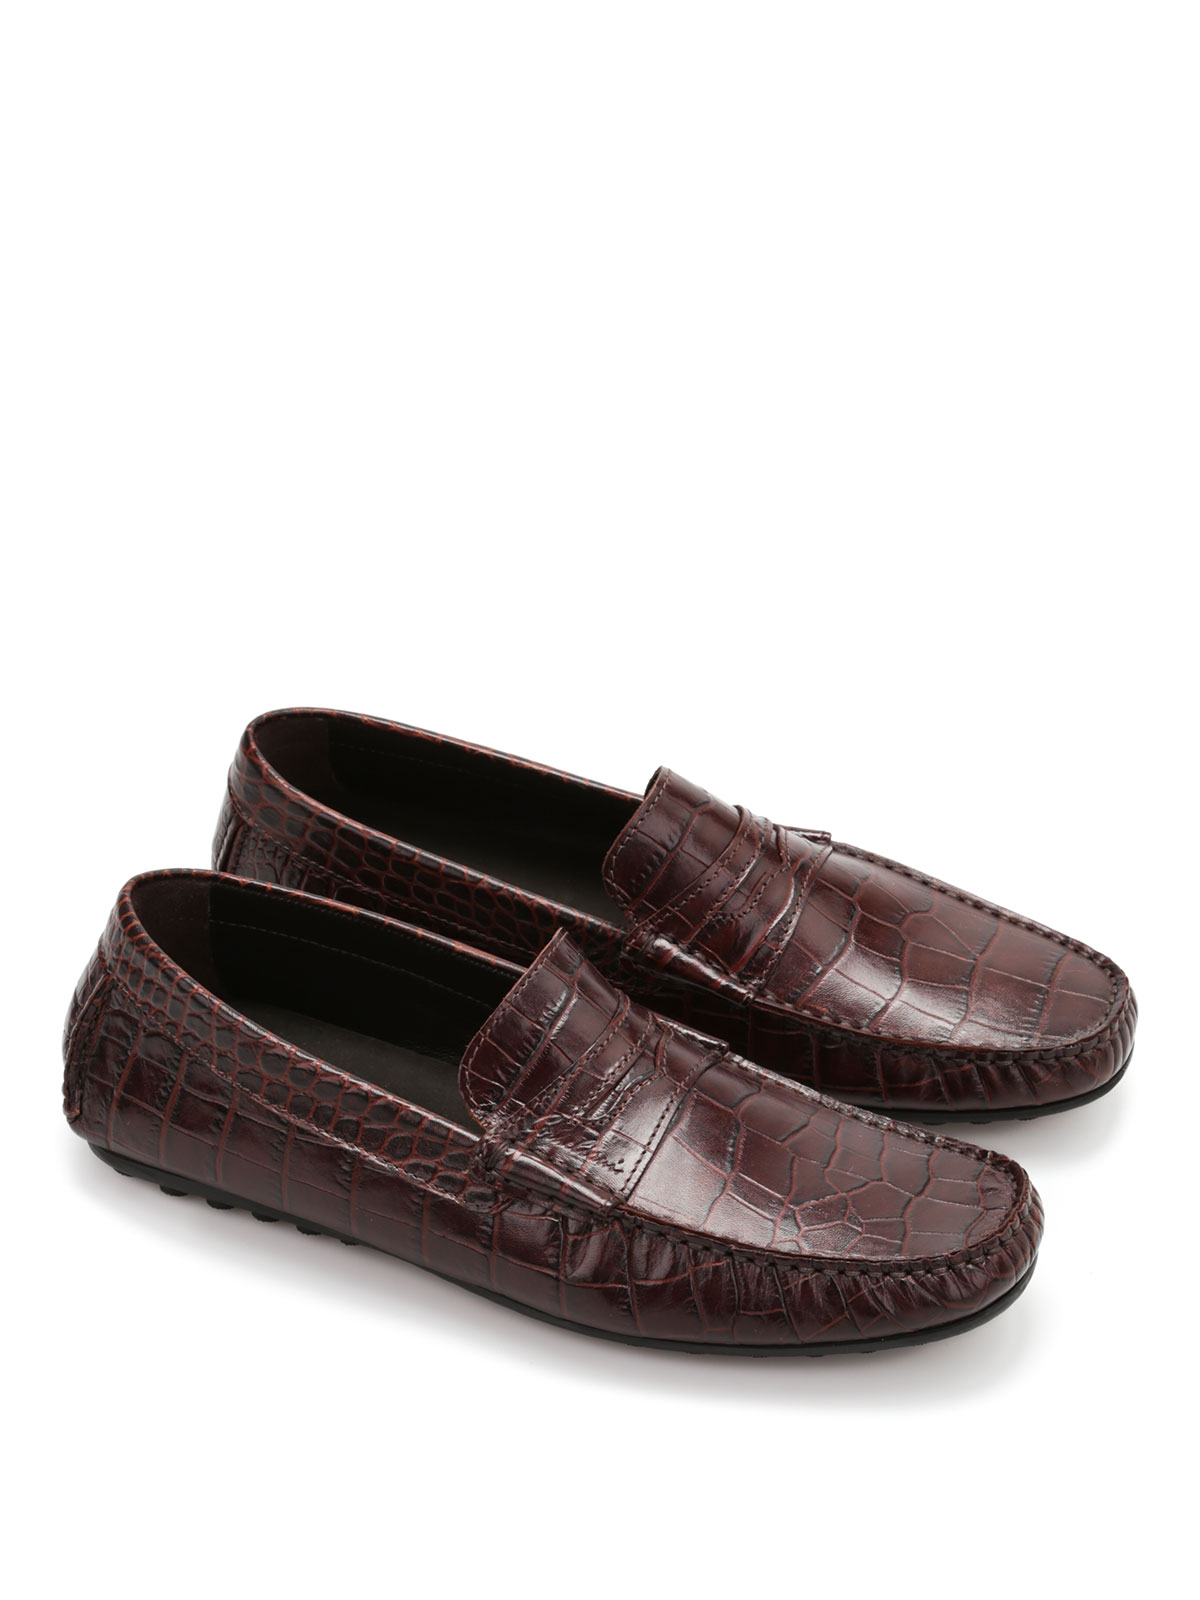 Corneliani - Croc print leather loafers 